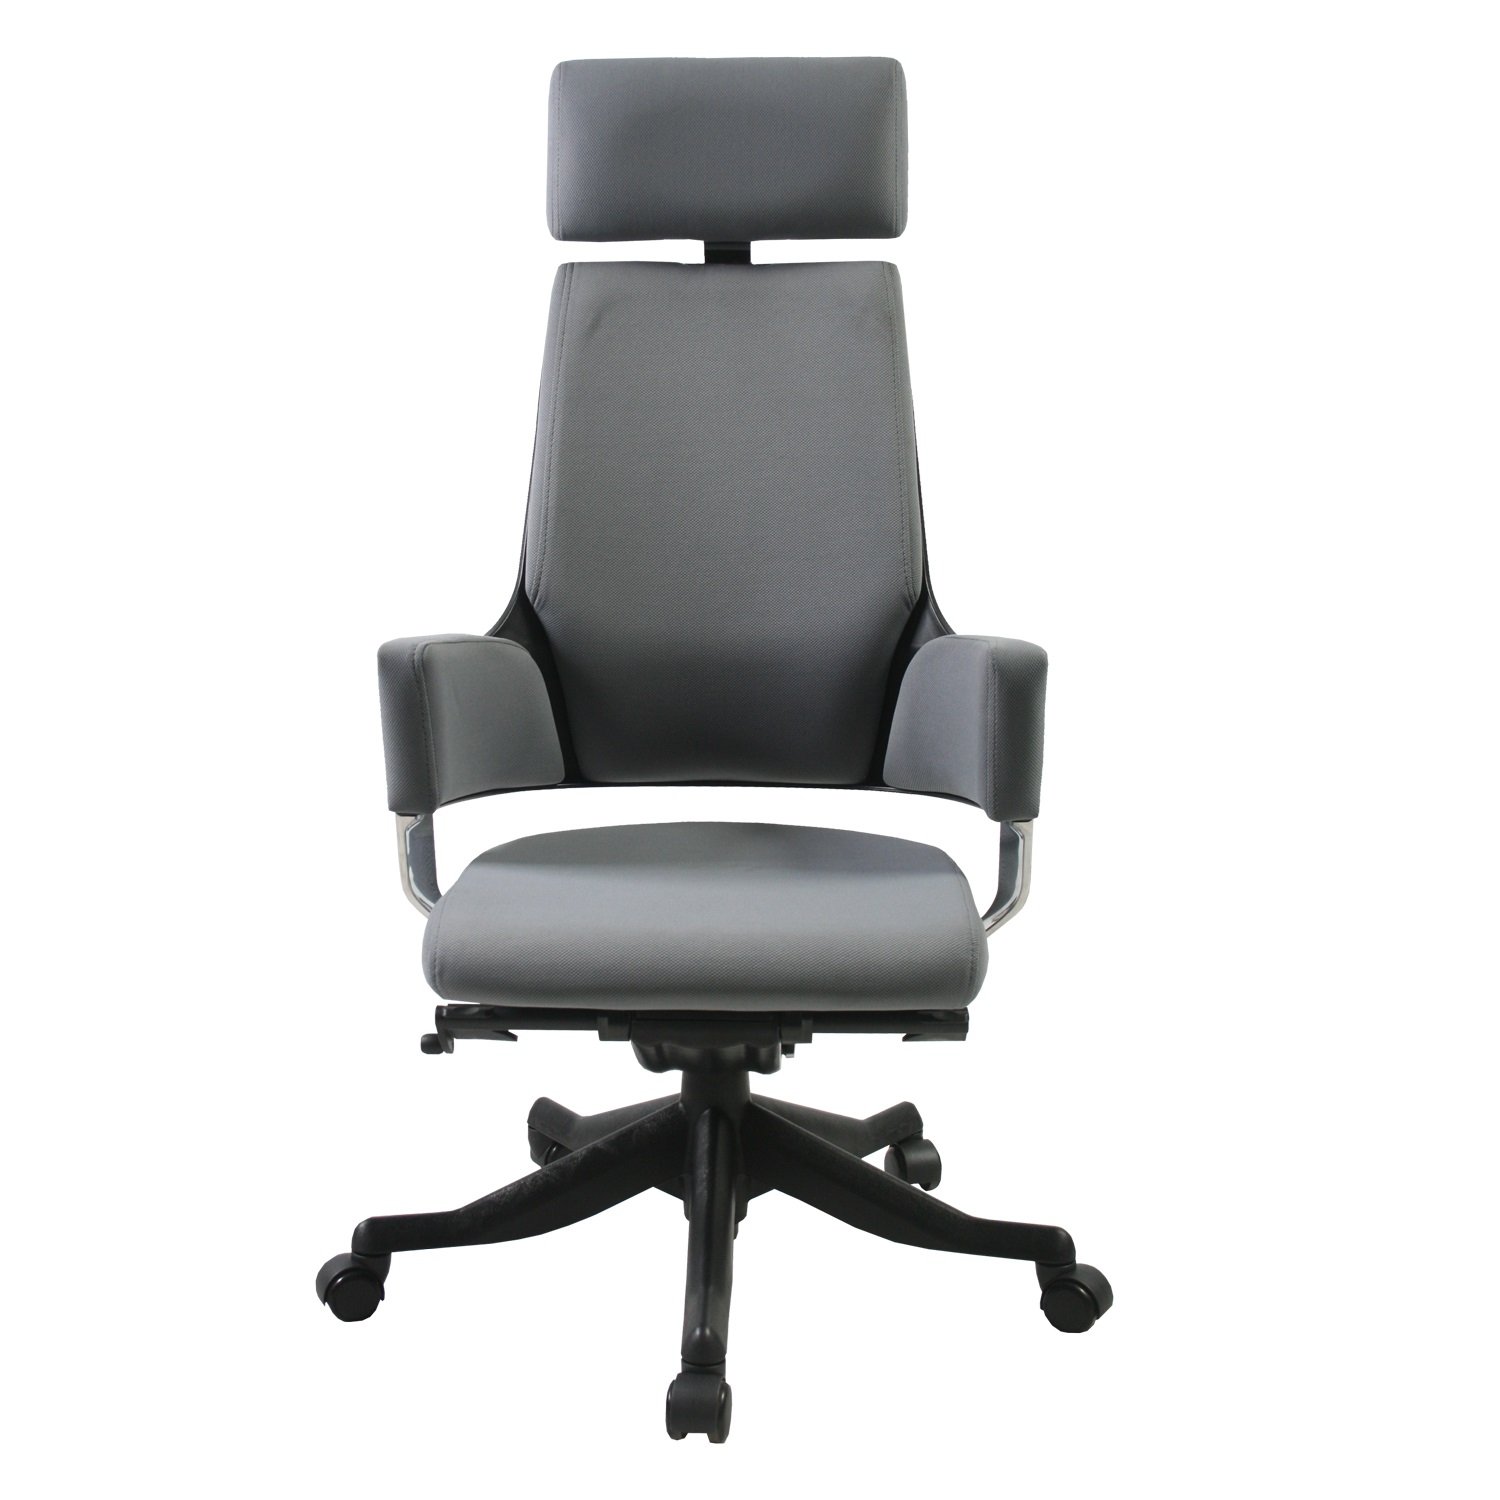 Biuro kėdė DELPHI su galvos atrama, 60x47x117,5-133,5 cm, pilka - 1